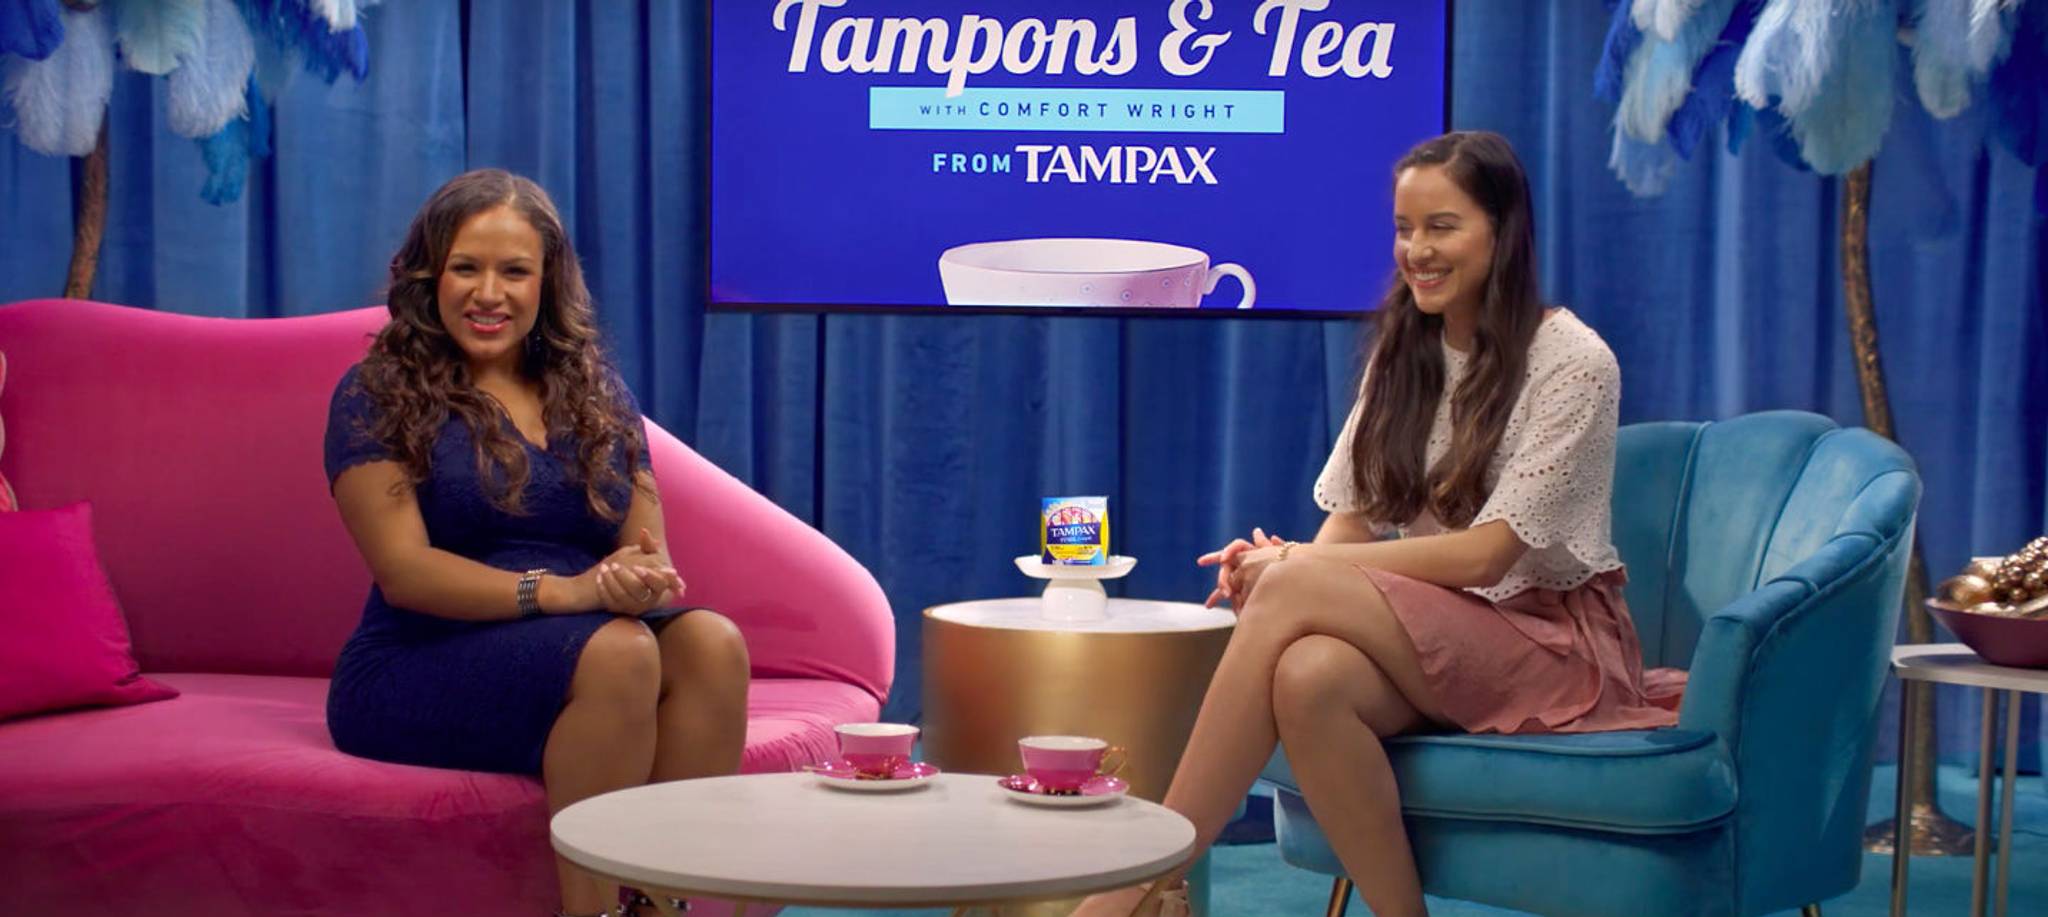 Tampax tackles tampon discomfort in frank advert